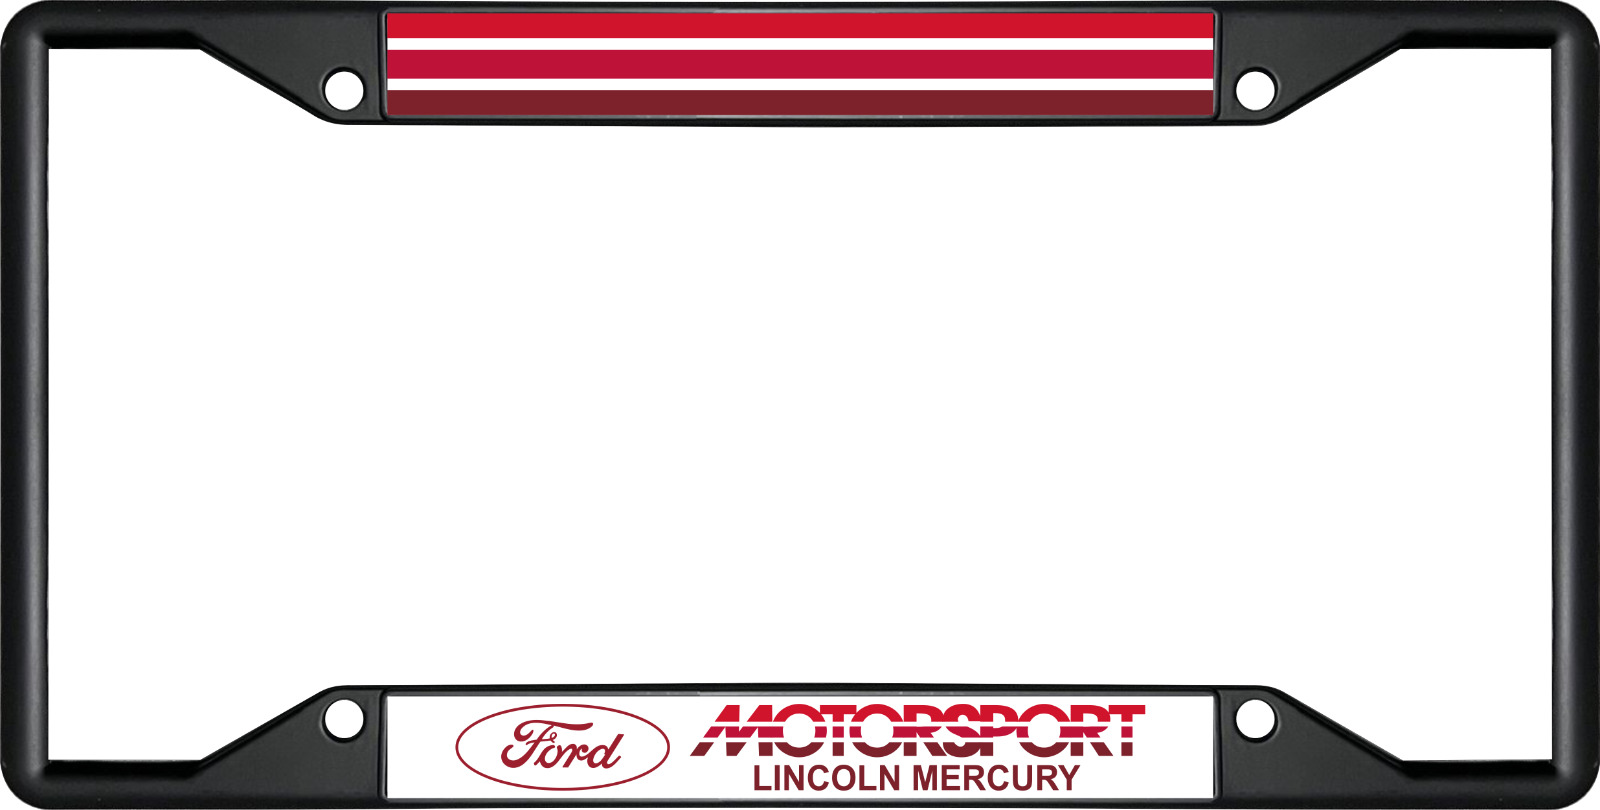 Ford Motorsport Lincoln Mercury Black License Plate Frame